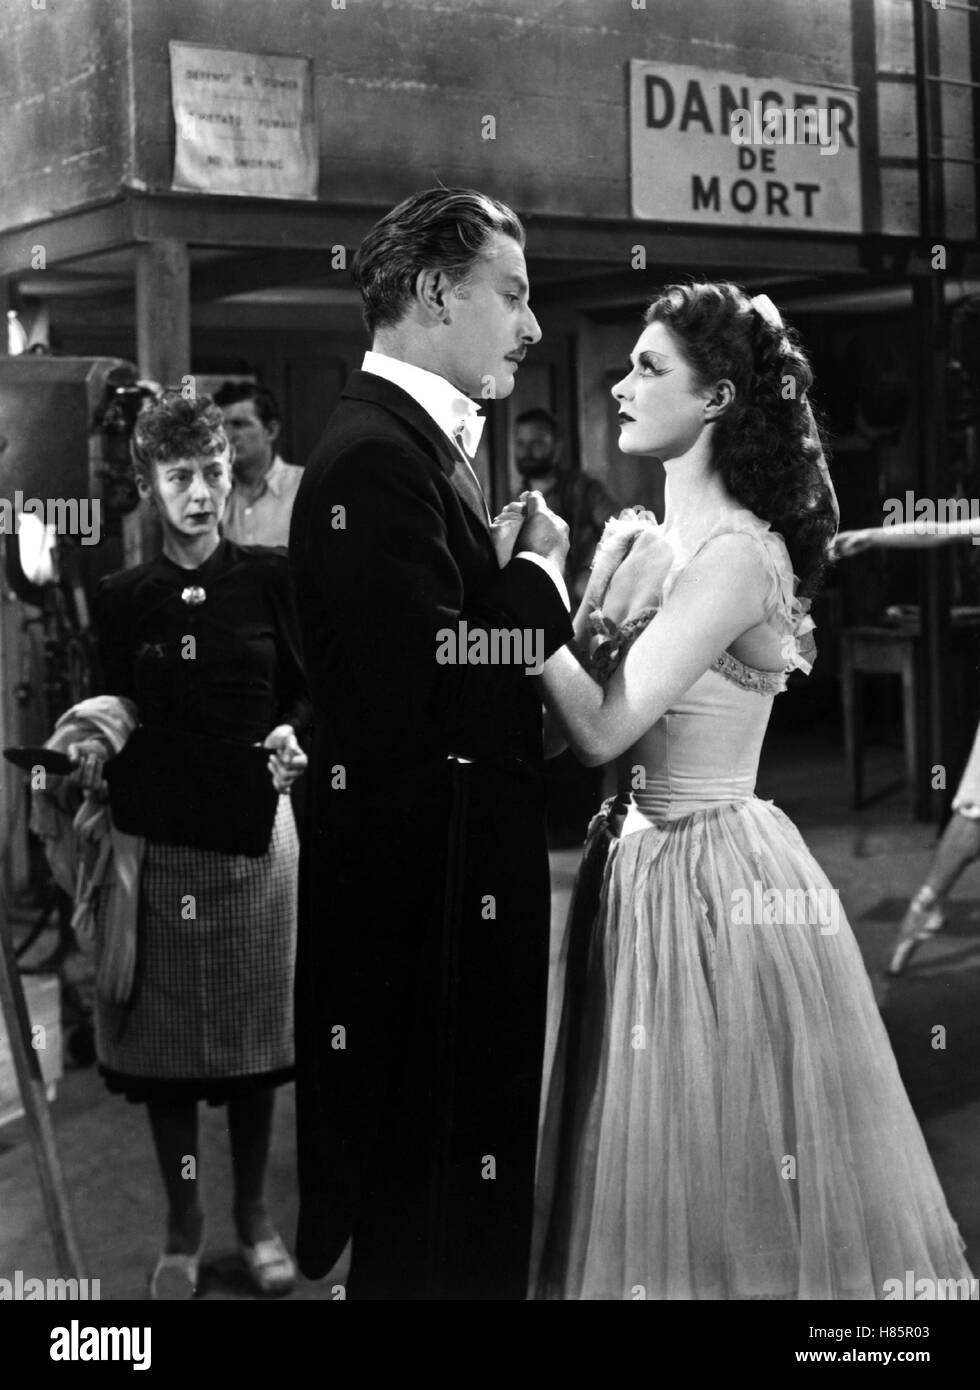 Die roten Schuhe, (RED SHOES) GB 1948, Regie: Michael Powell, ADOLF WOHLBRÜCK, MOIRA SHEARER Foto Stock